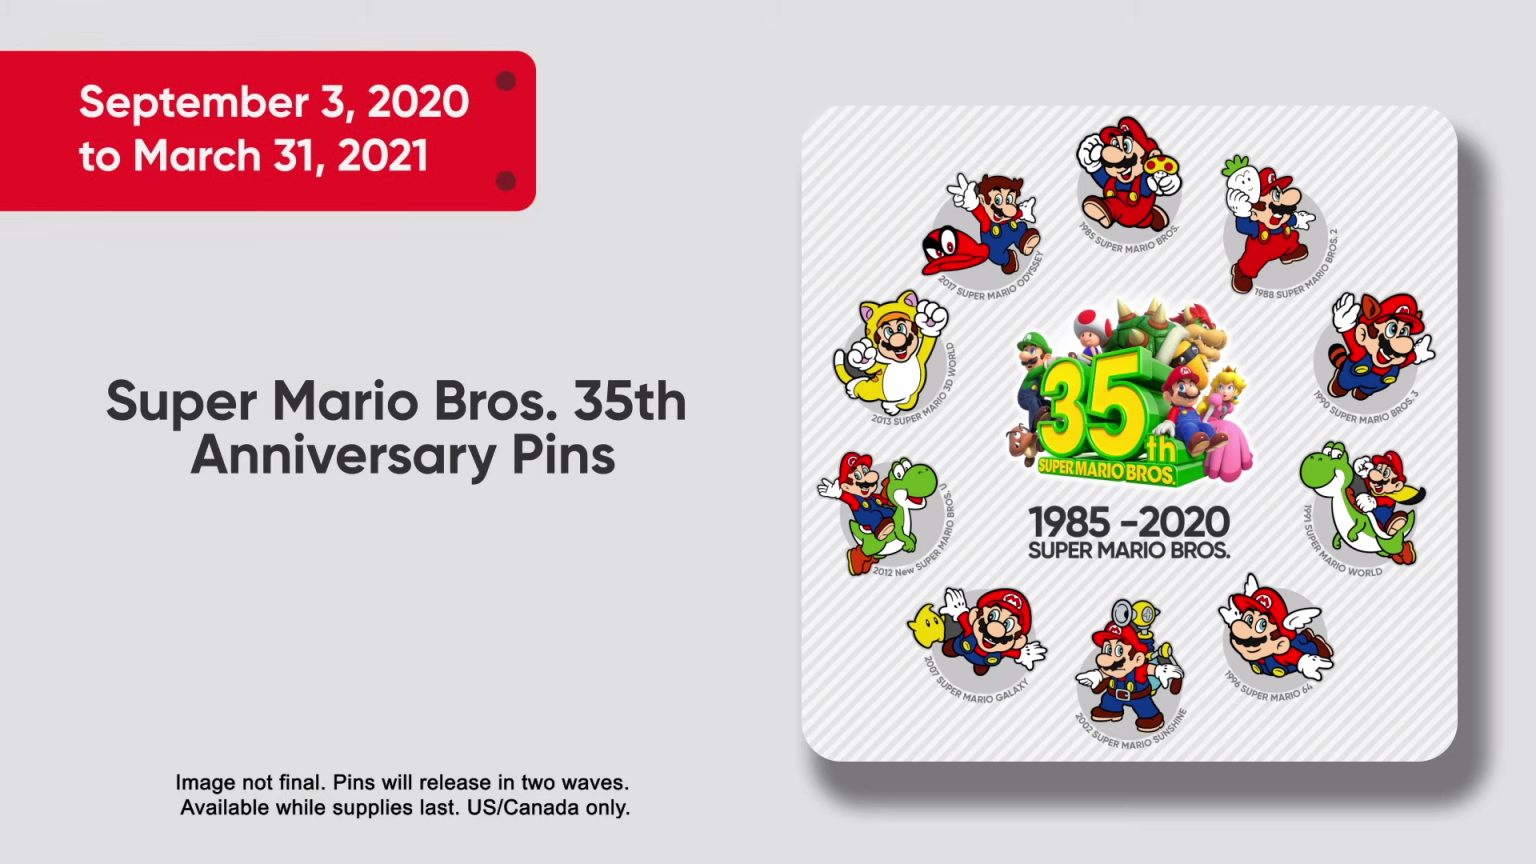 My Nintendo Celebrates Super Mario Bross 35th Anniversary With New Rewards Nintendo Wire 6299